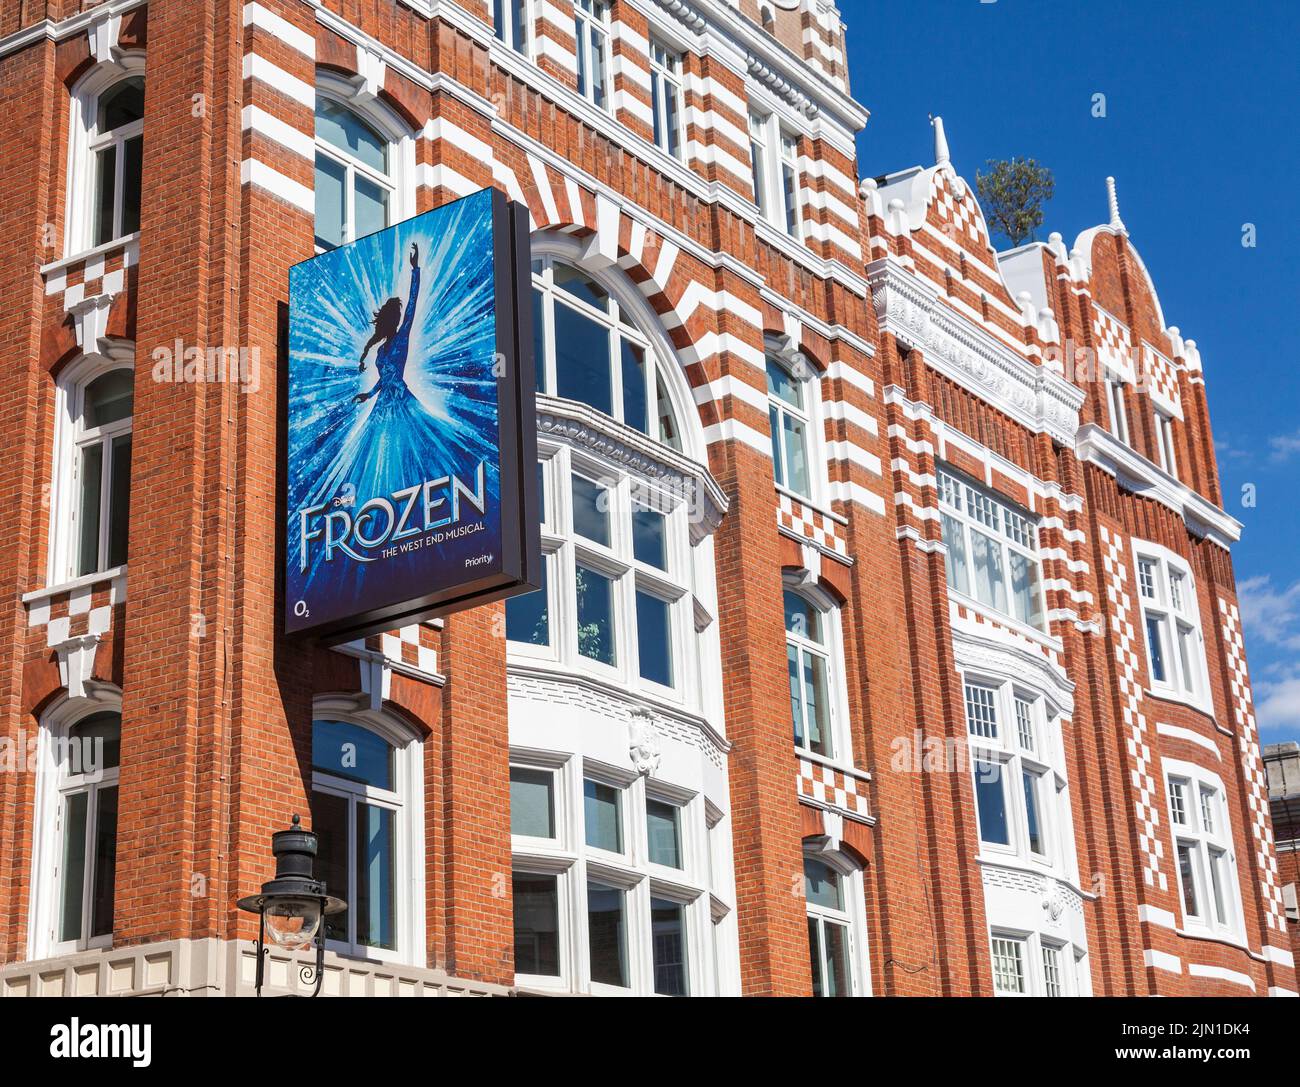 The musical Frozen at London's Theatre Royal Drury Lane,London,England,UK Stock Photo